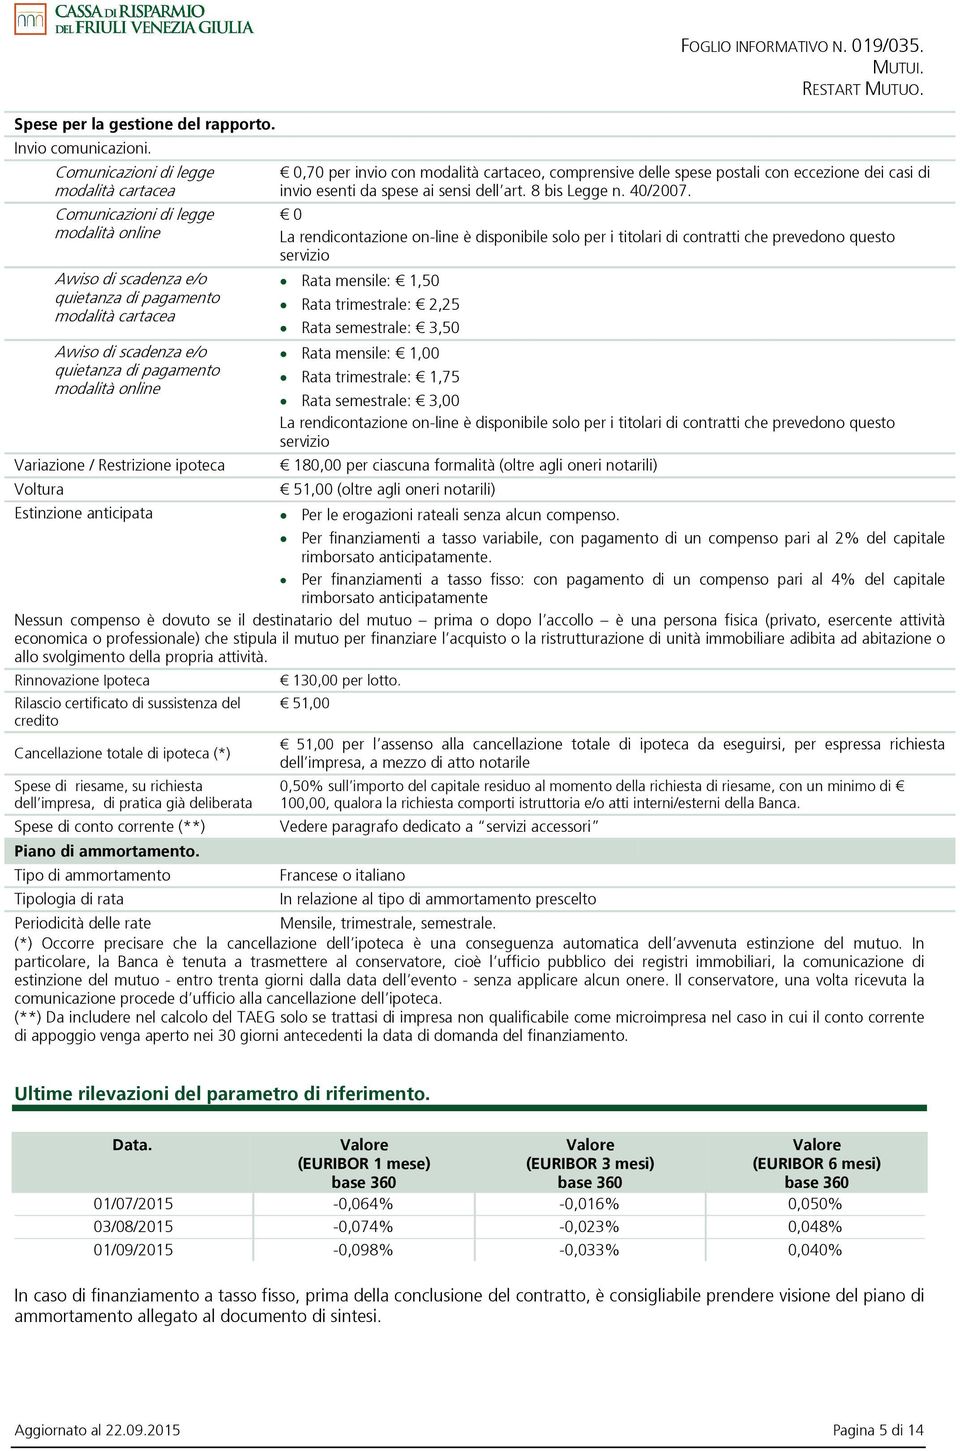 online Variazione / Restrizione ipoteca Voltura FOGLIO INFORMATIVO N. 019/035.